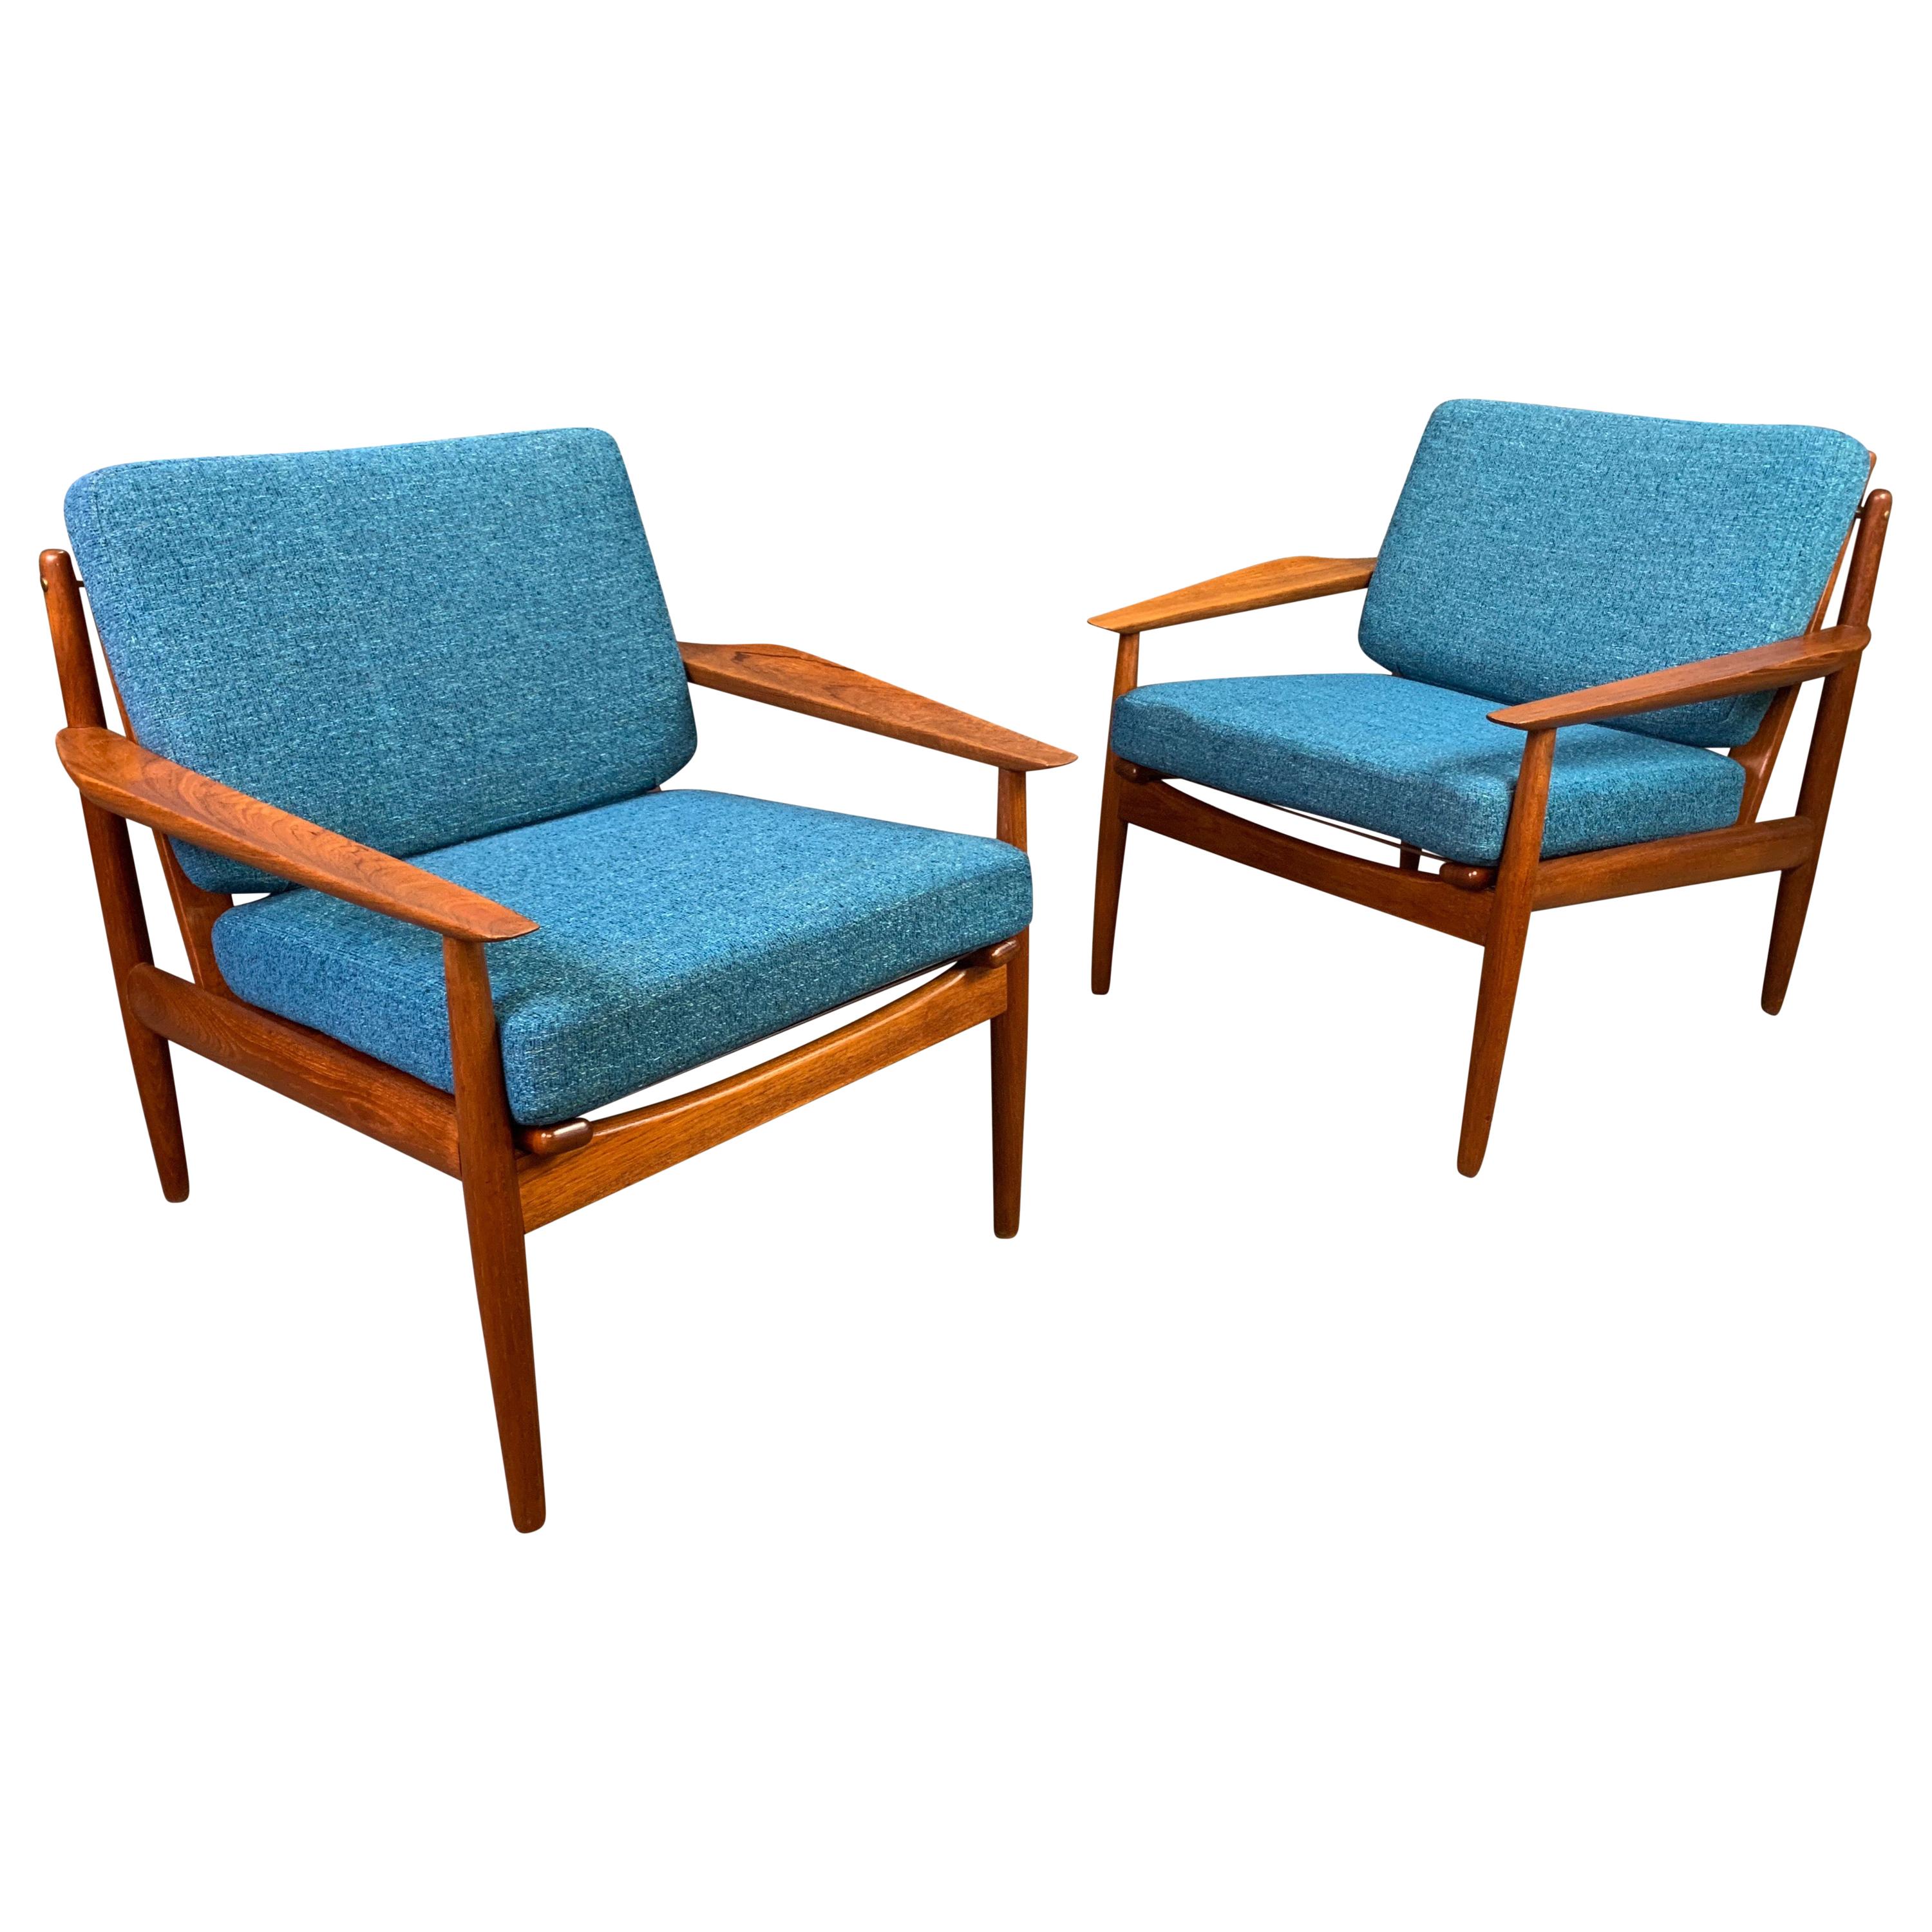 Pair of Vintage Danish Midcentury Teak Easy Chairs by Arne Vodder for Glostrup